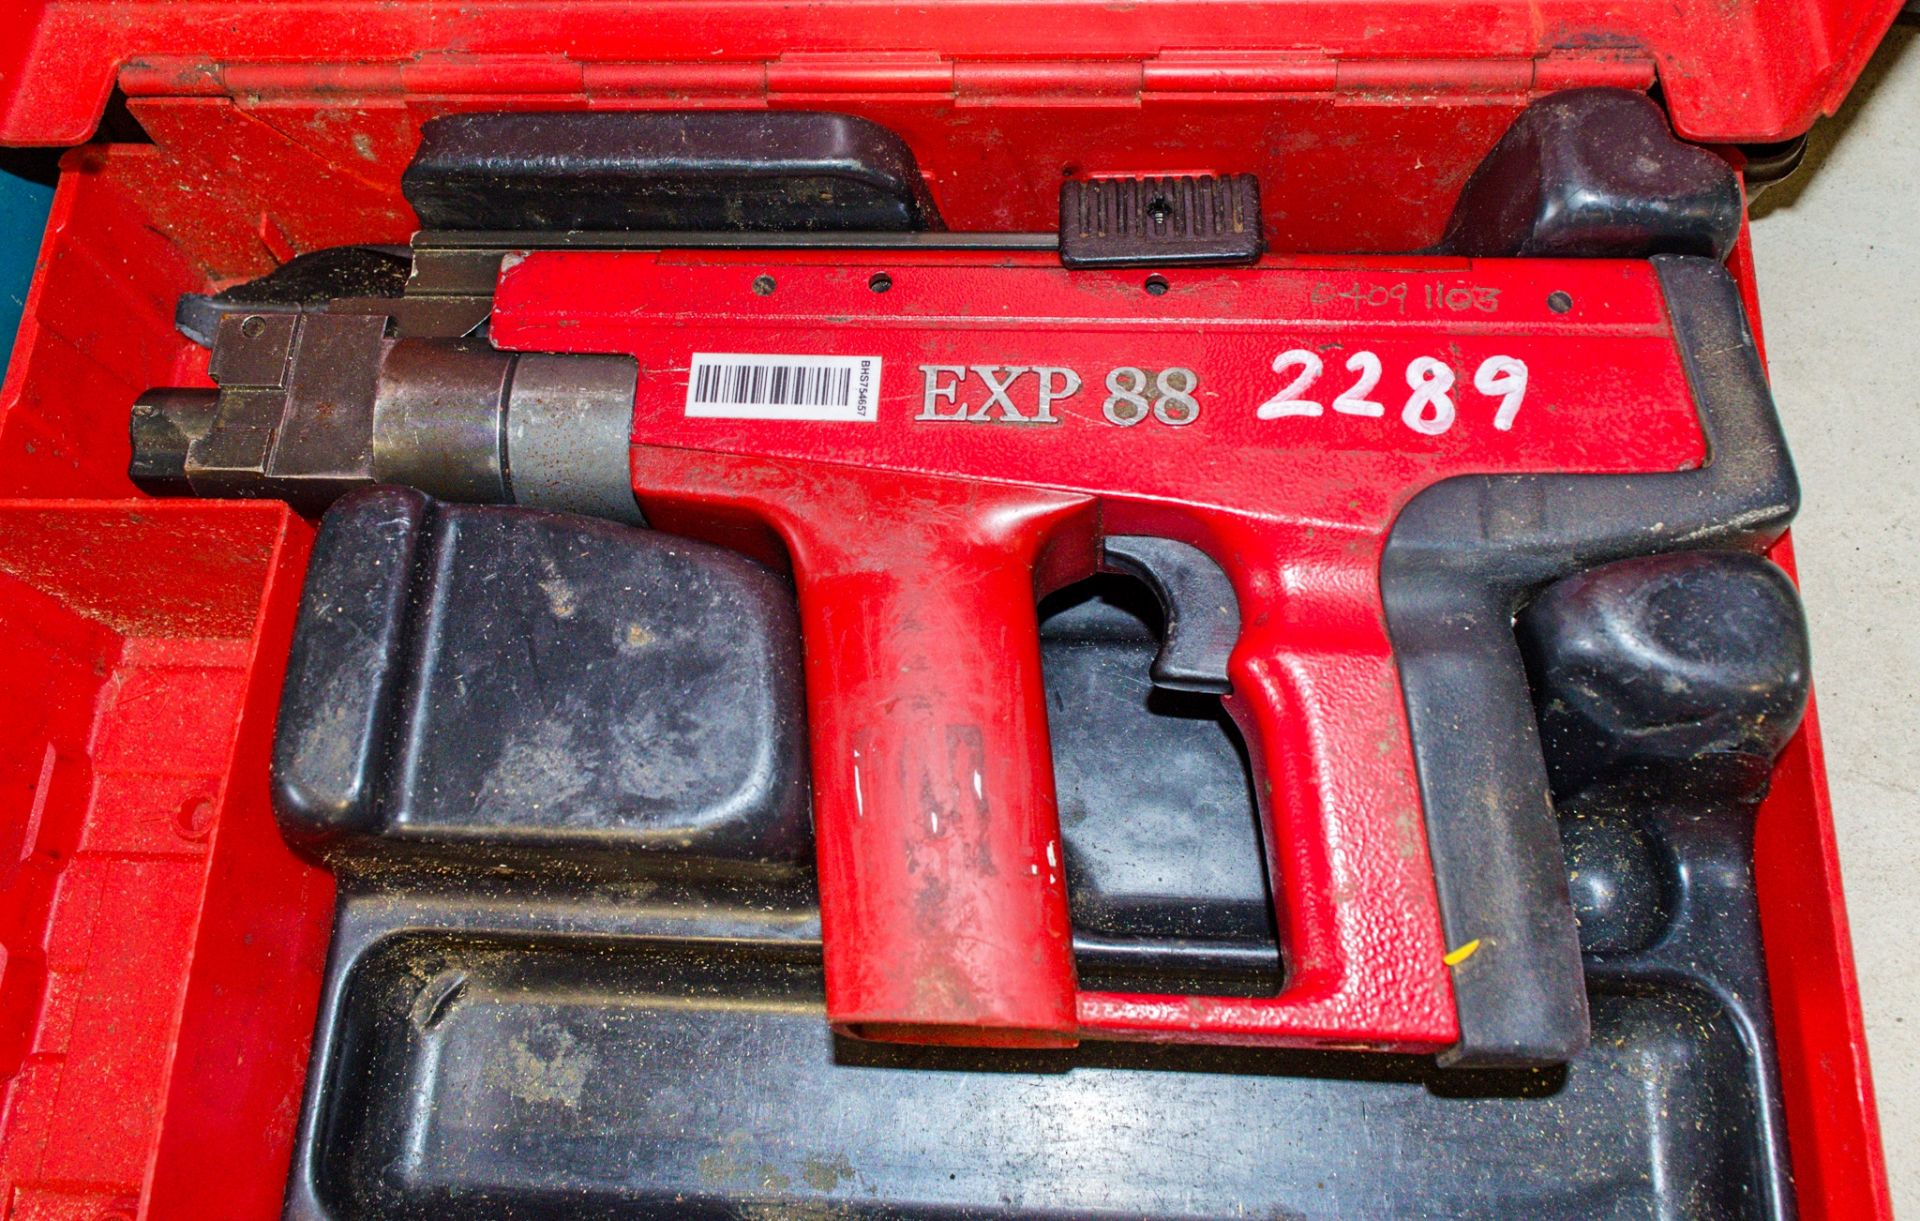 Hilti EXP88 nail gun c/w carry case